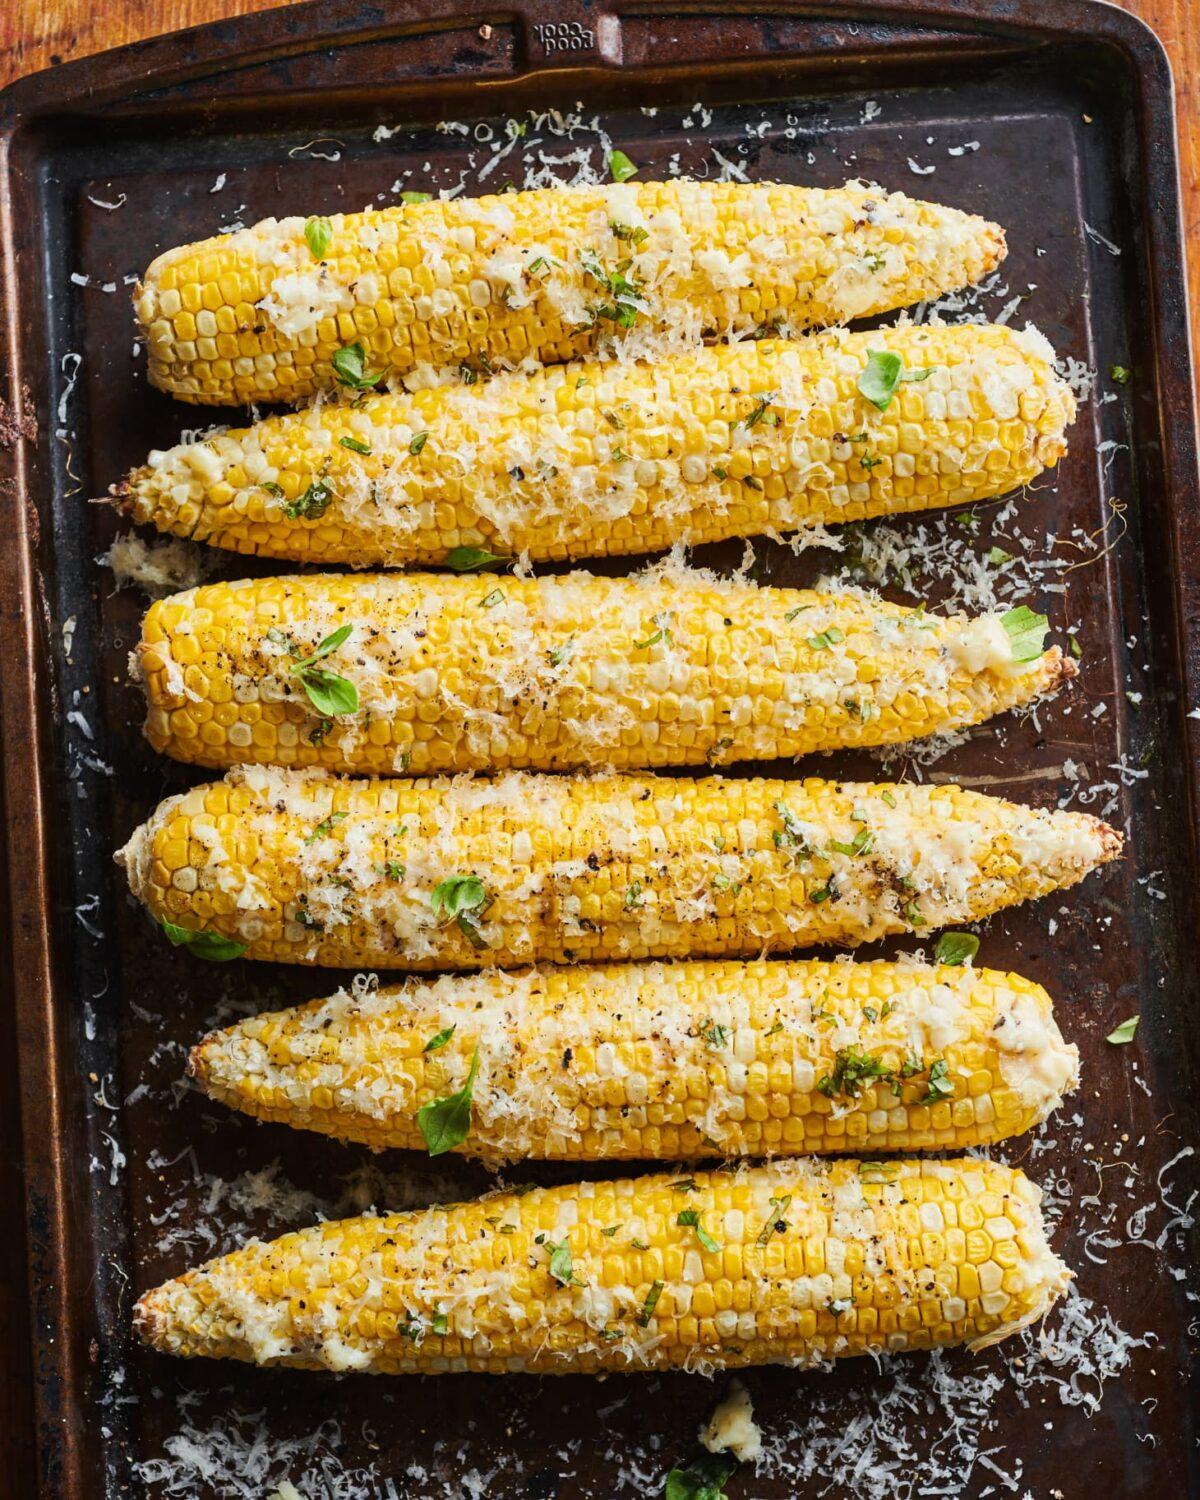 Roasting brings out a wonderful, caramelized sweetness in the corn. (Joe Lingeman/TNS)